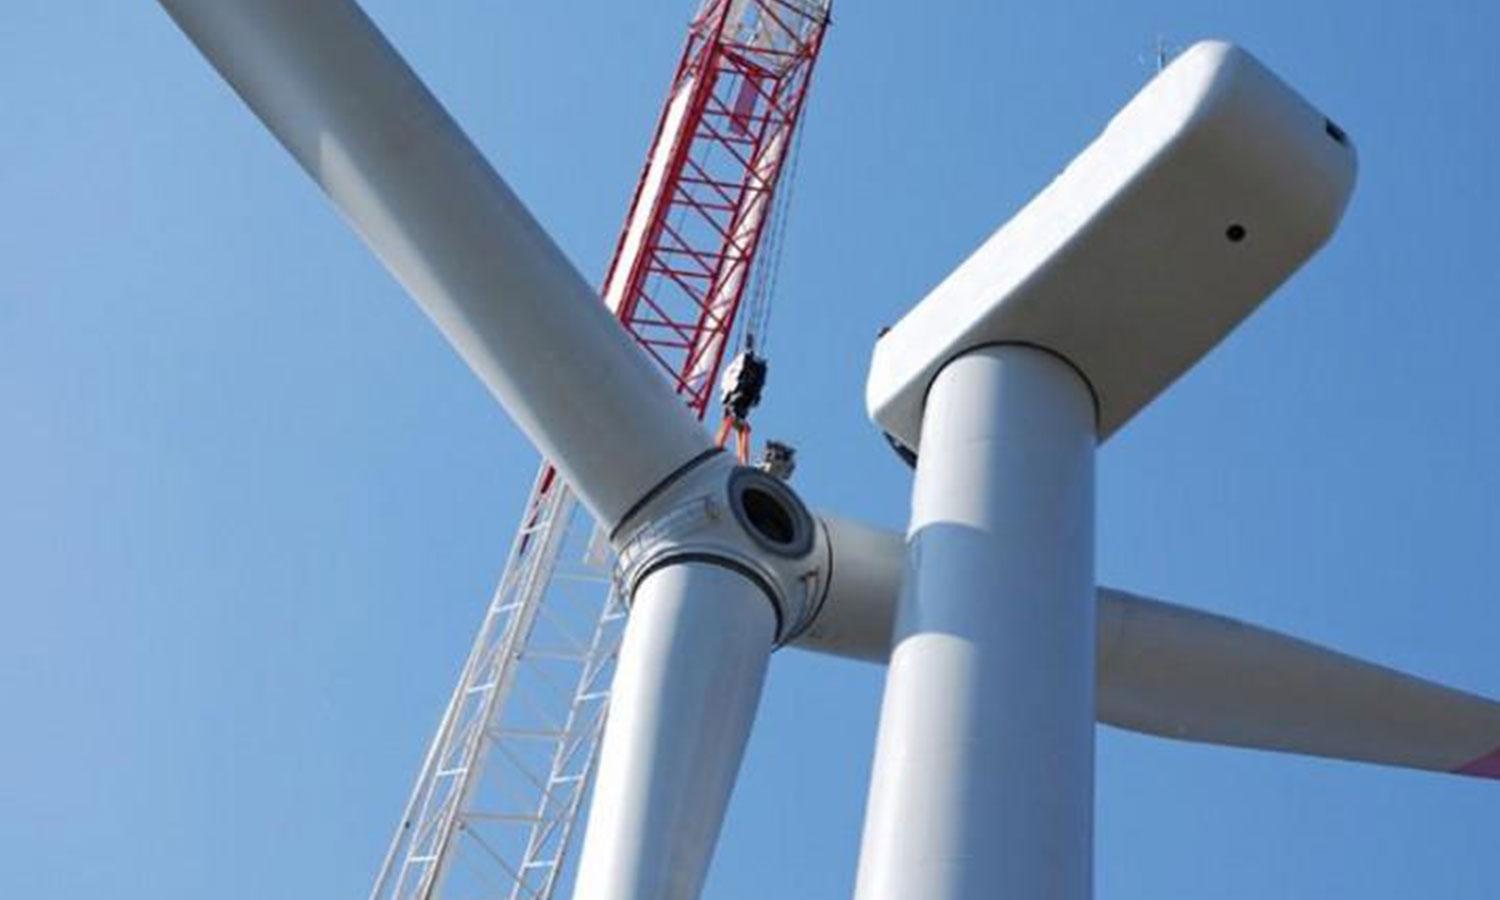 Wind turbine blades installed by a crane